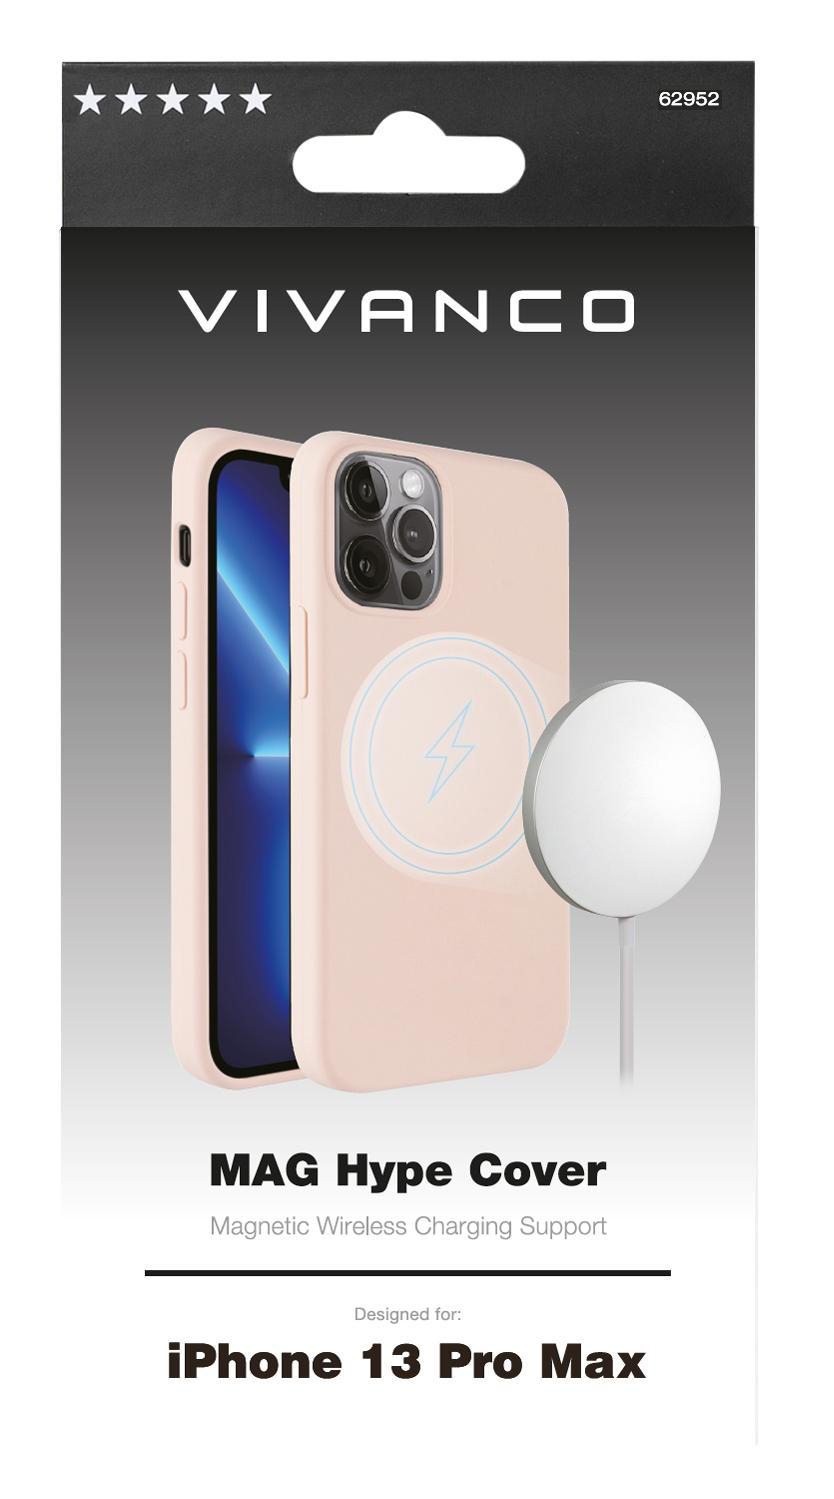 Apple, Rosa Pro Hype, 13 Mag Backcover, Max, VIVANCO iPhone